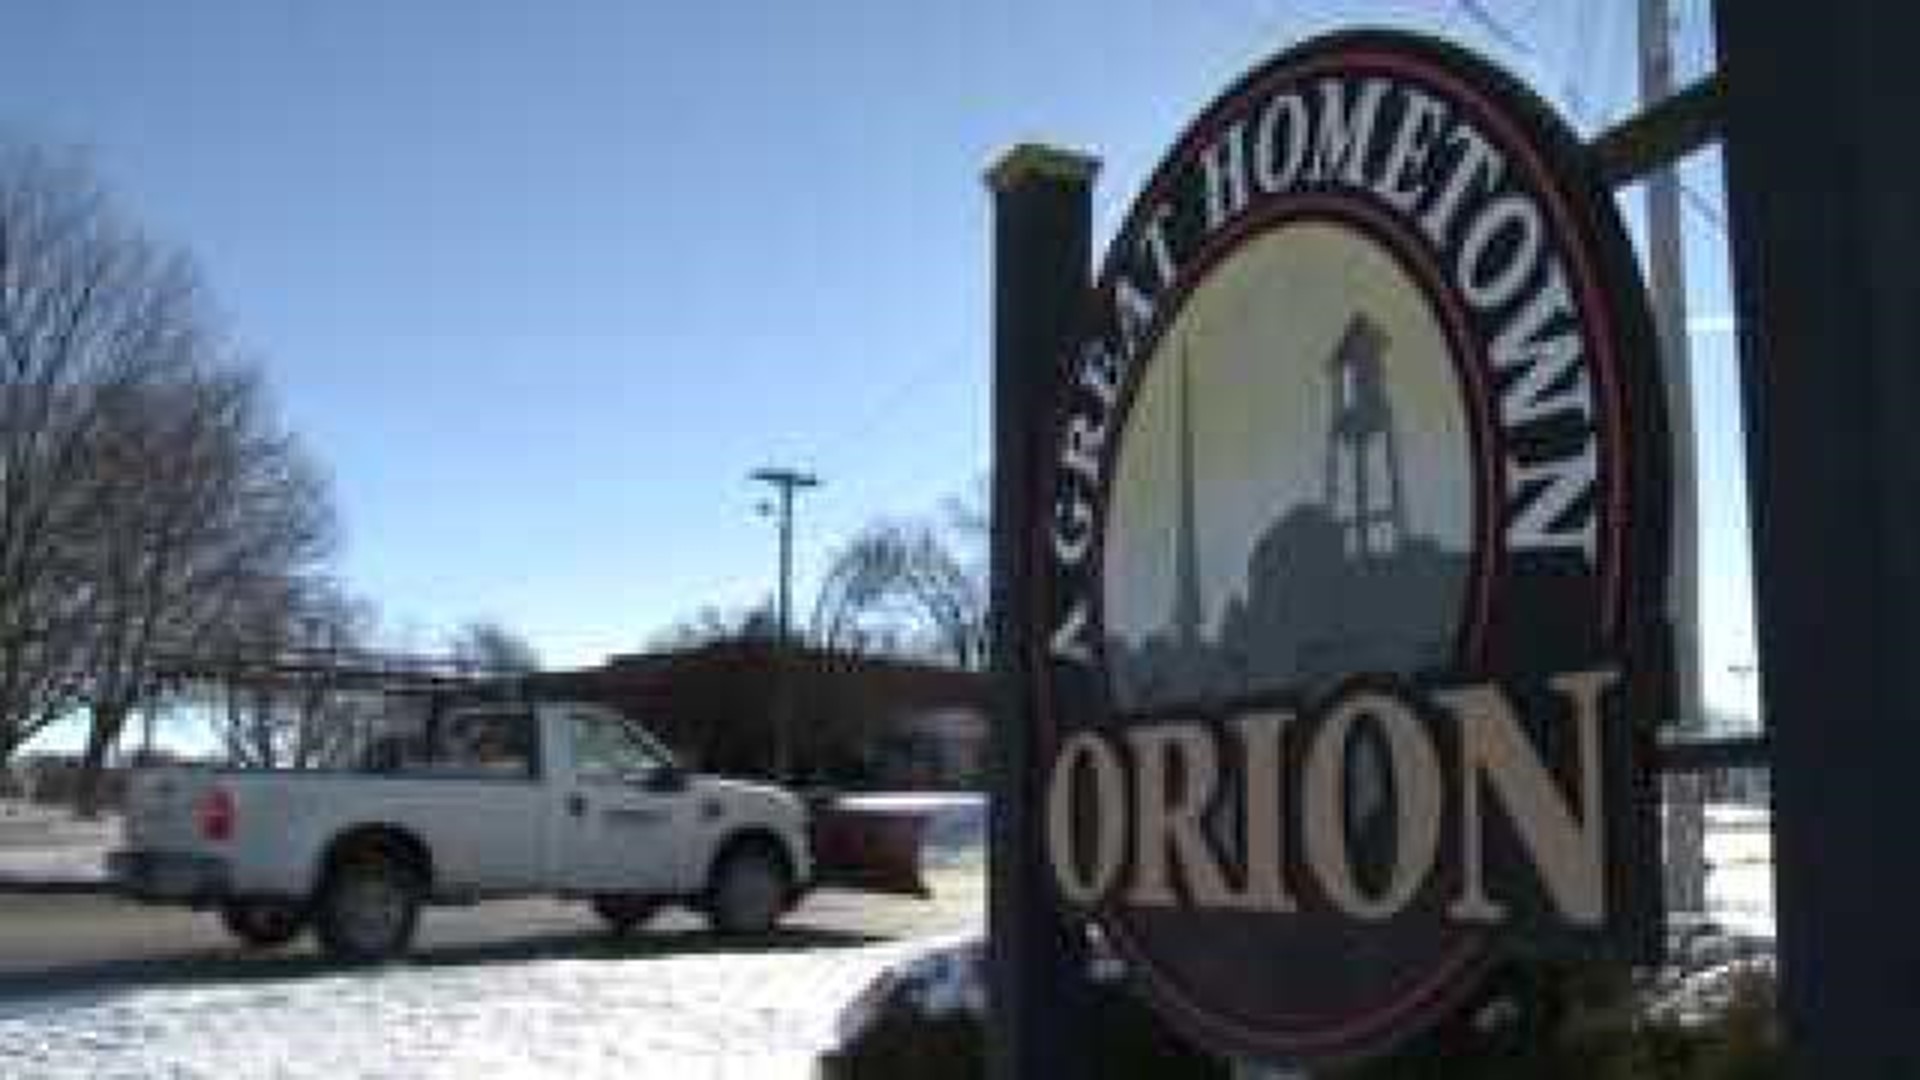 Orion....Top 10 safest places to live